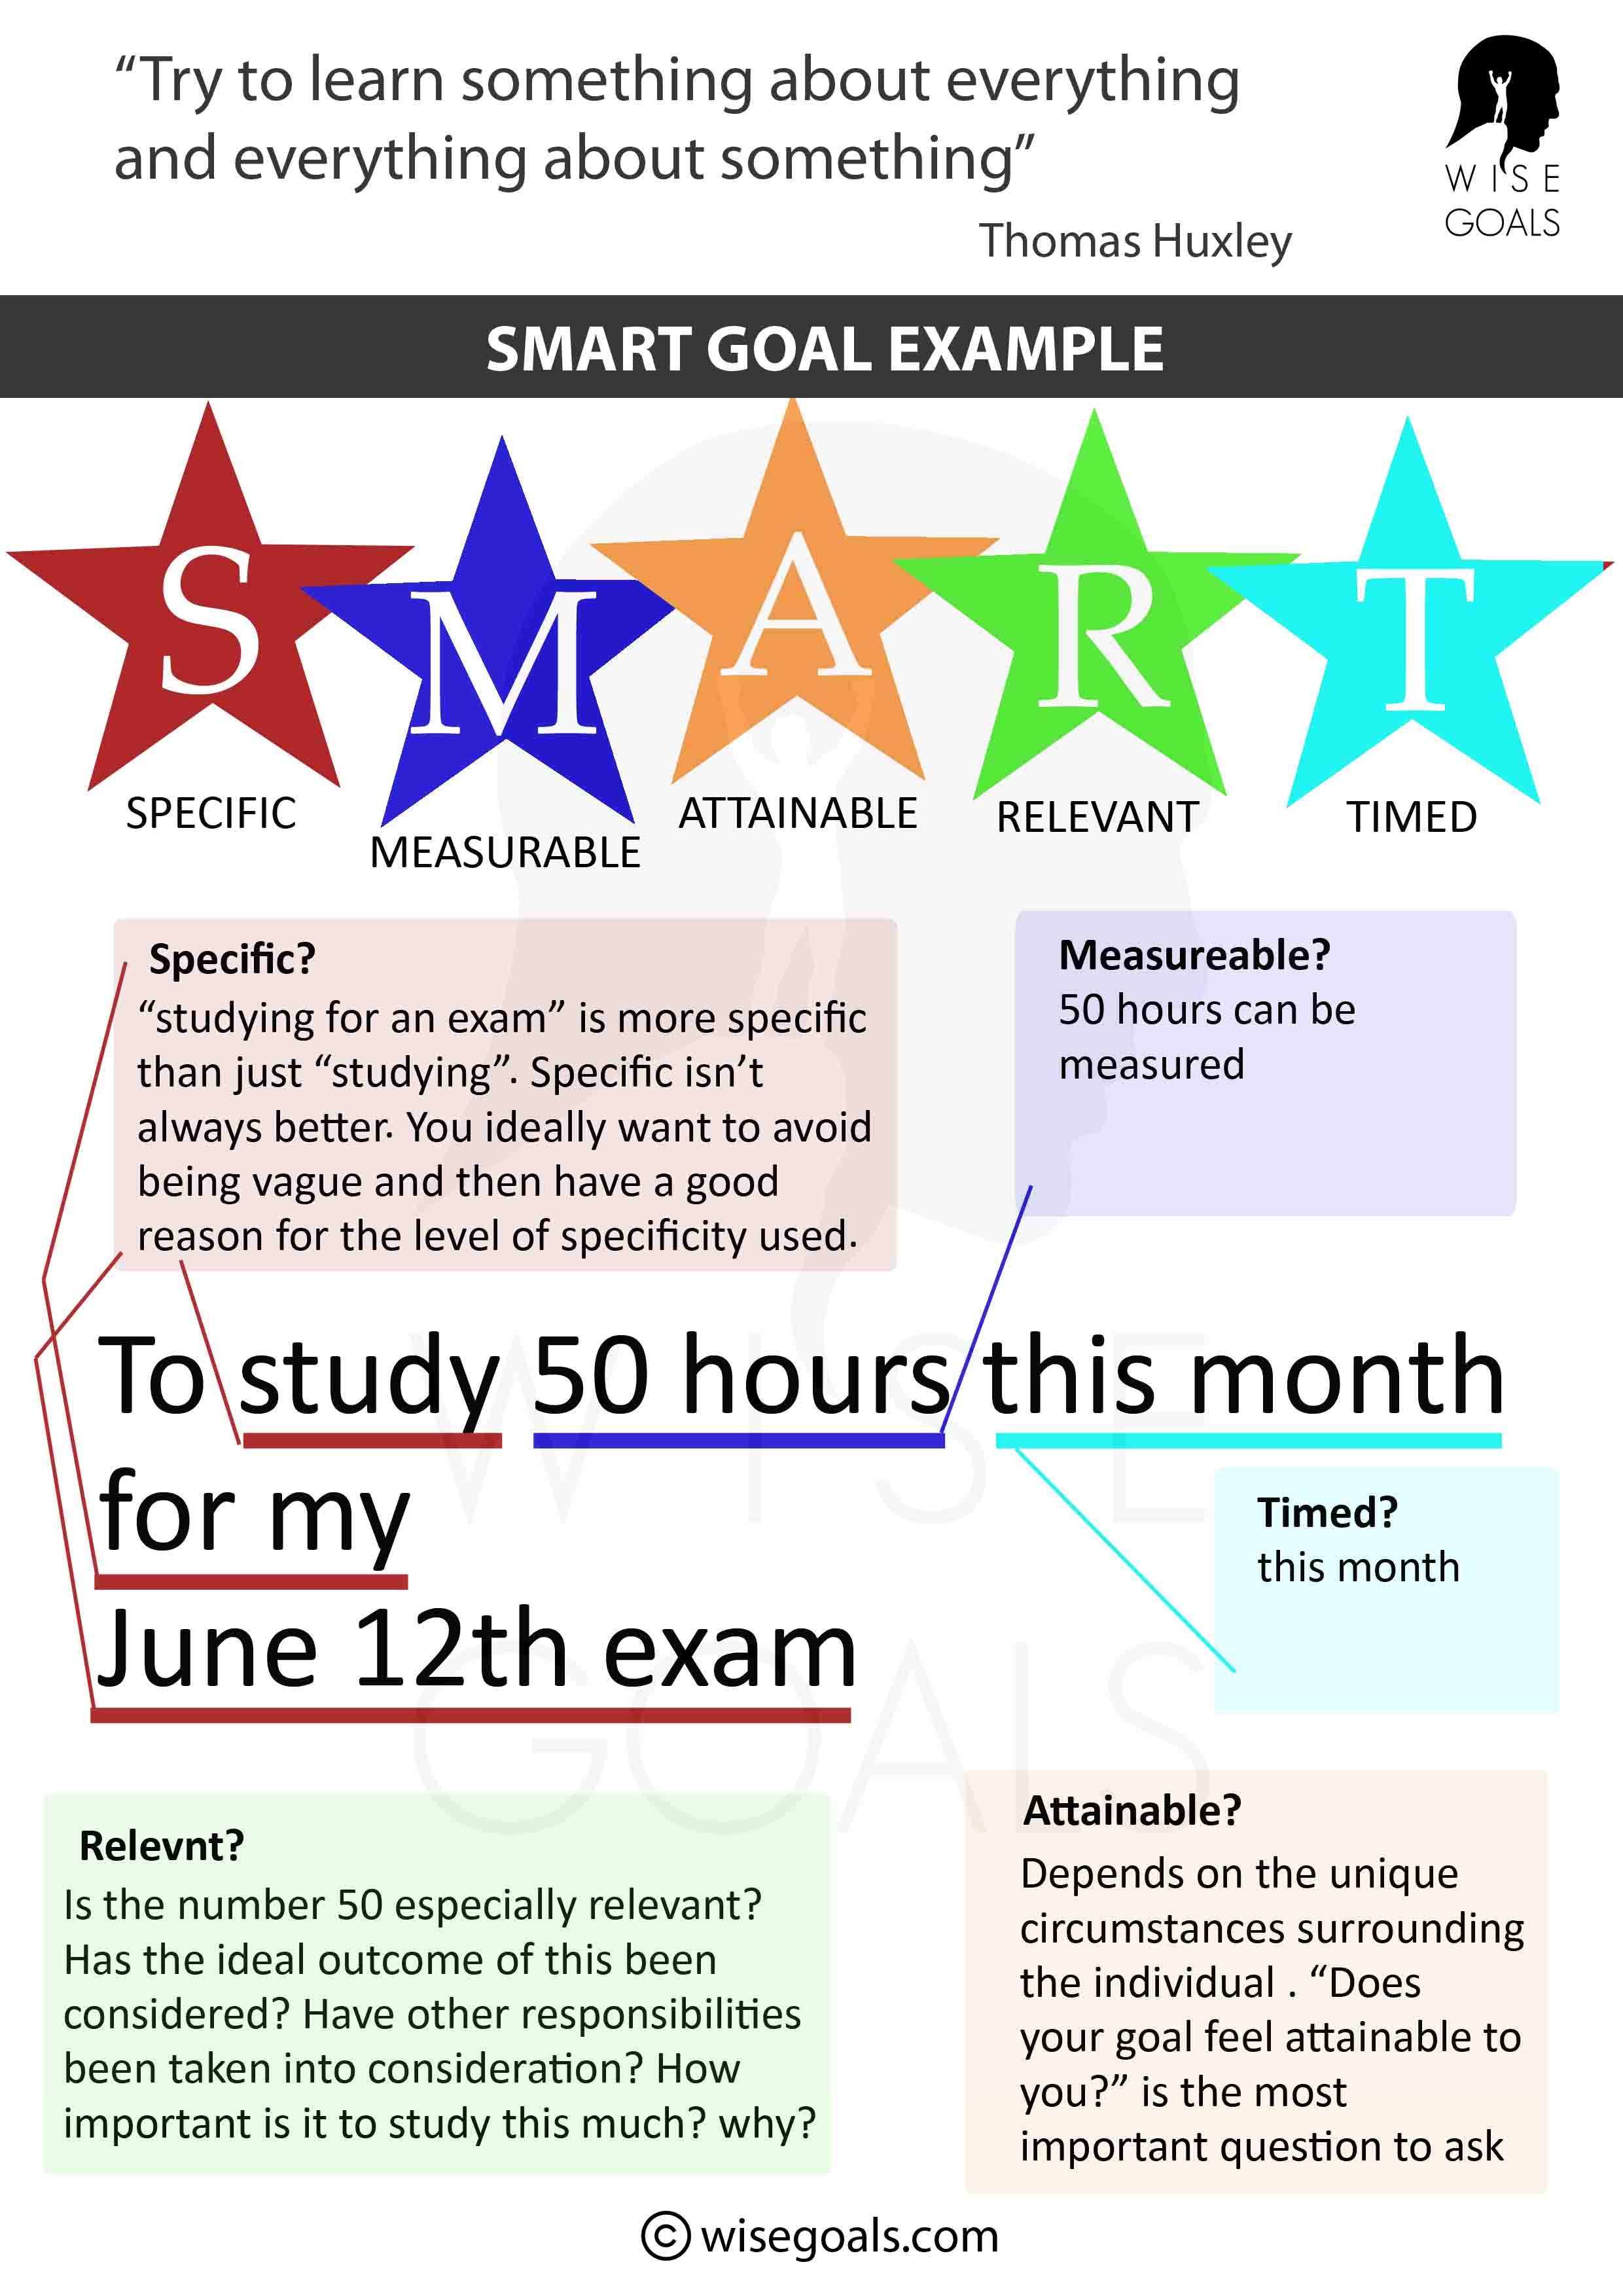 Smart goal example: Study